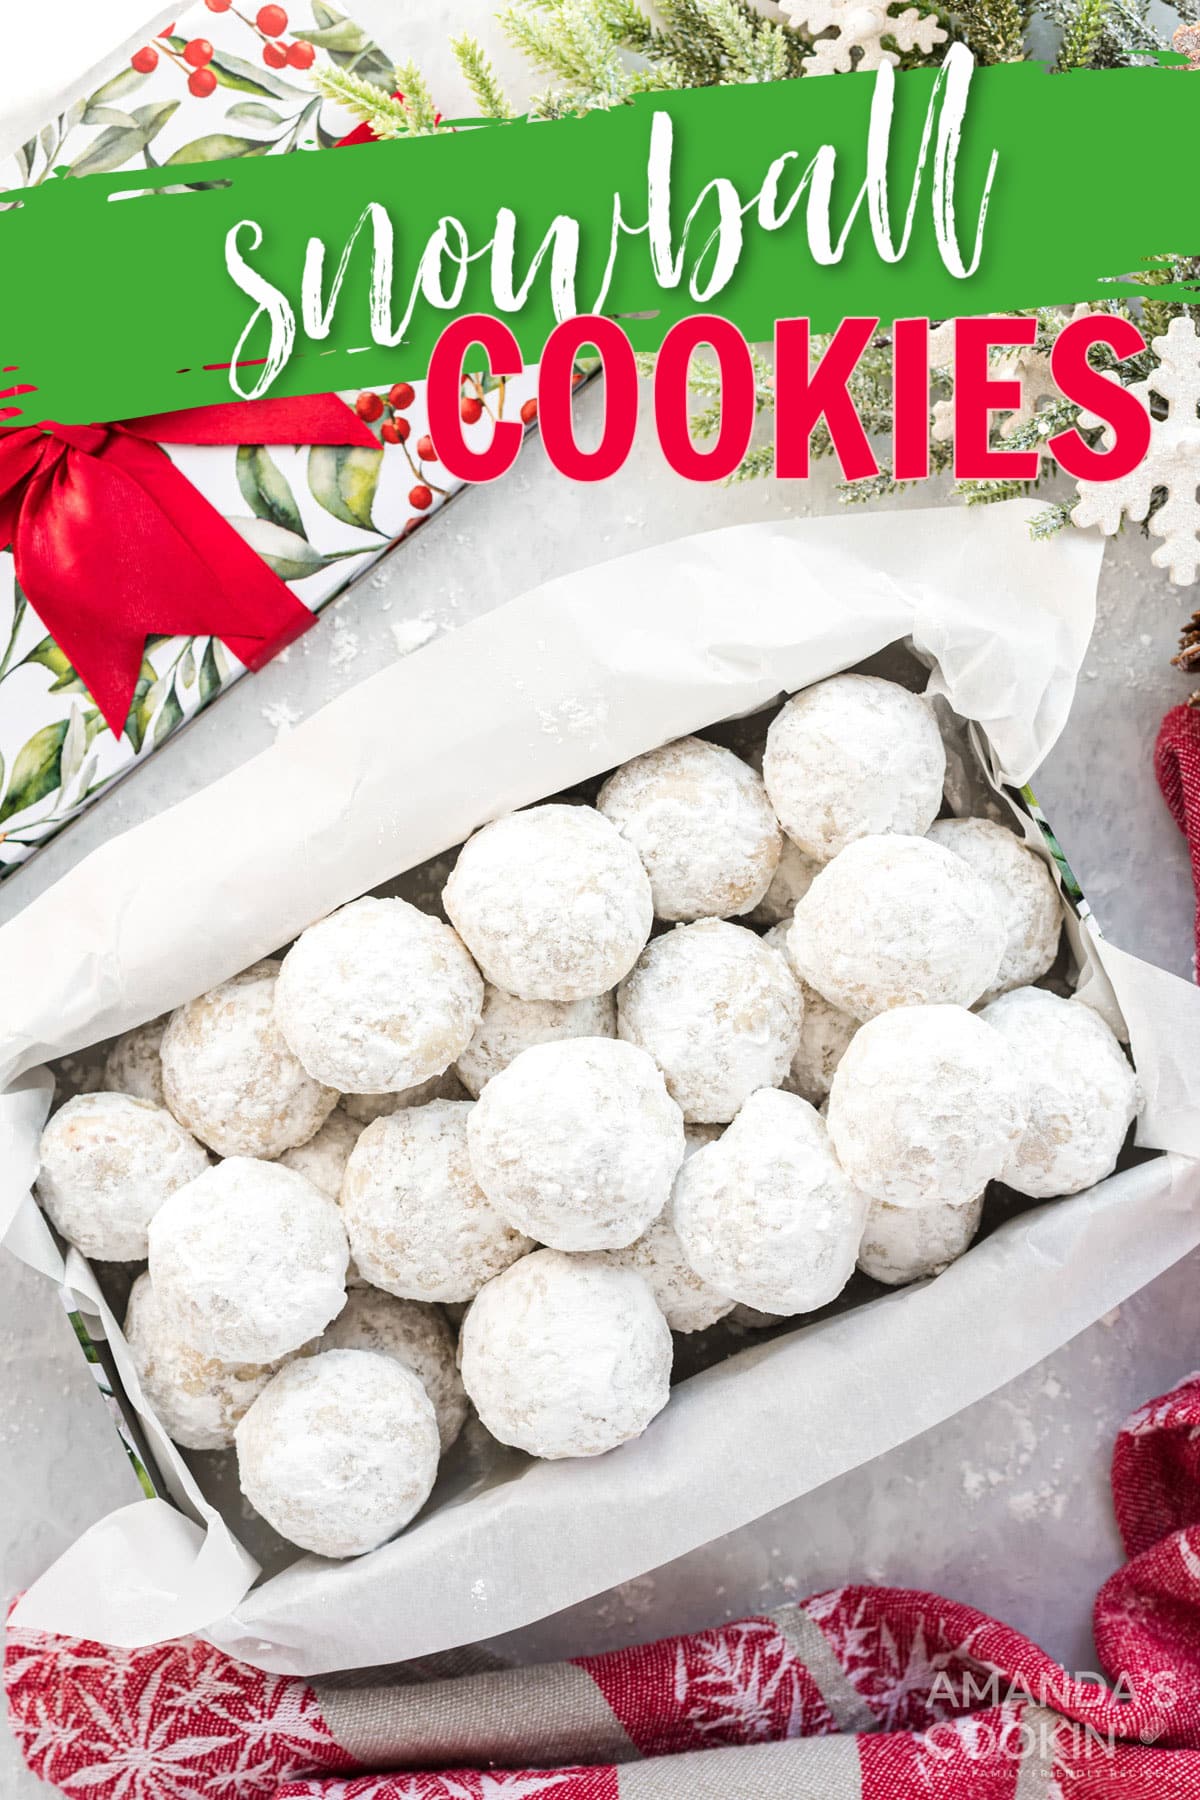 Snowball Cookies - Amanda's Cookin' - Christmas Cookies